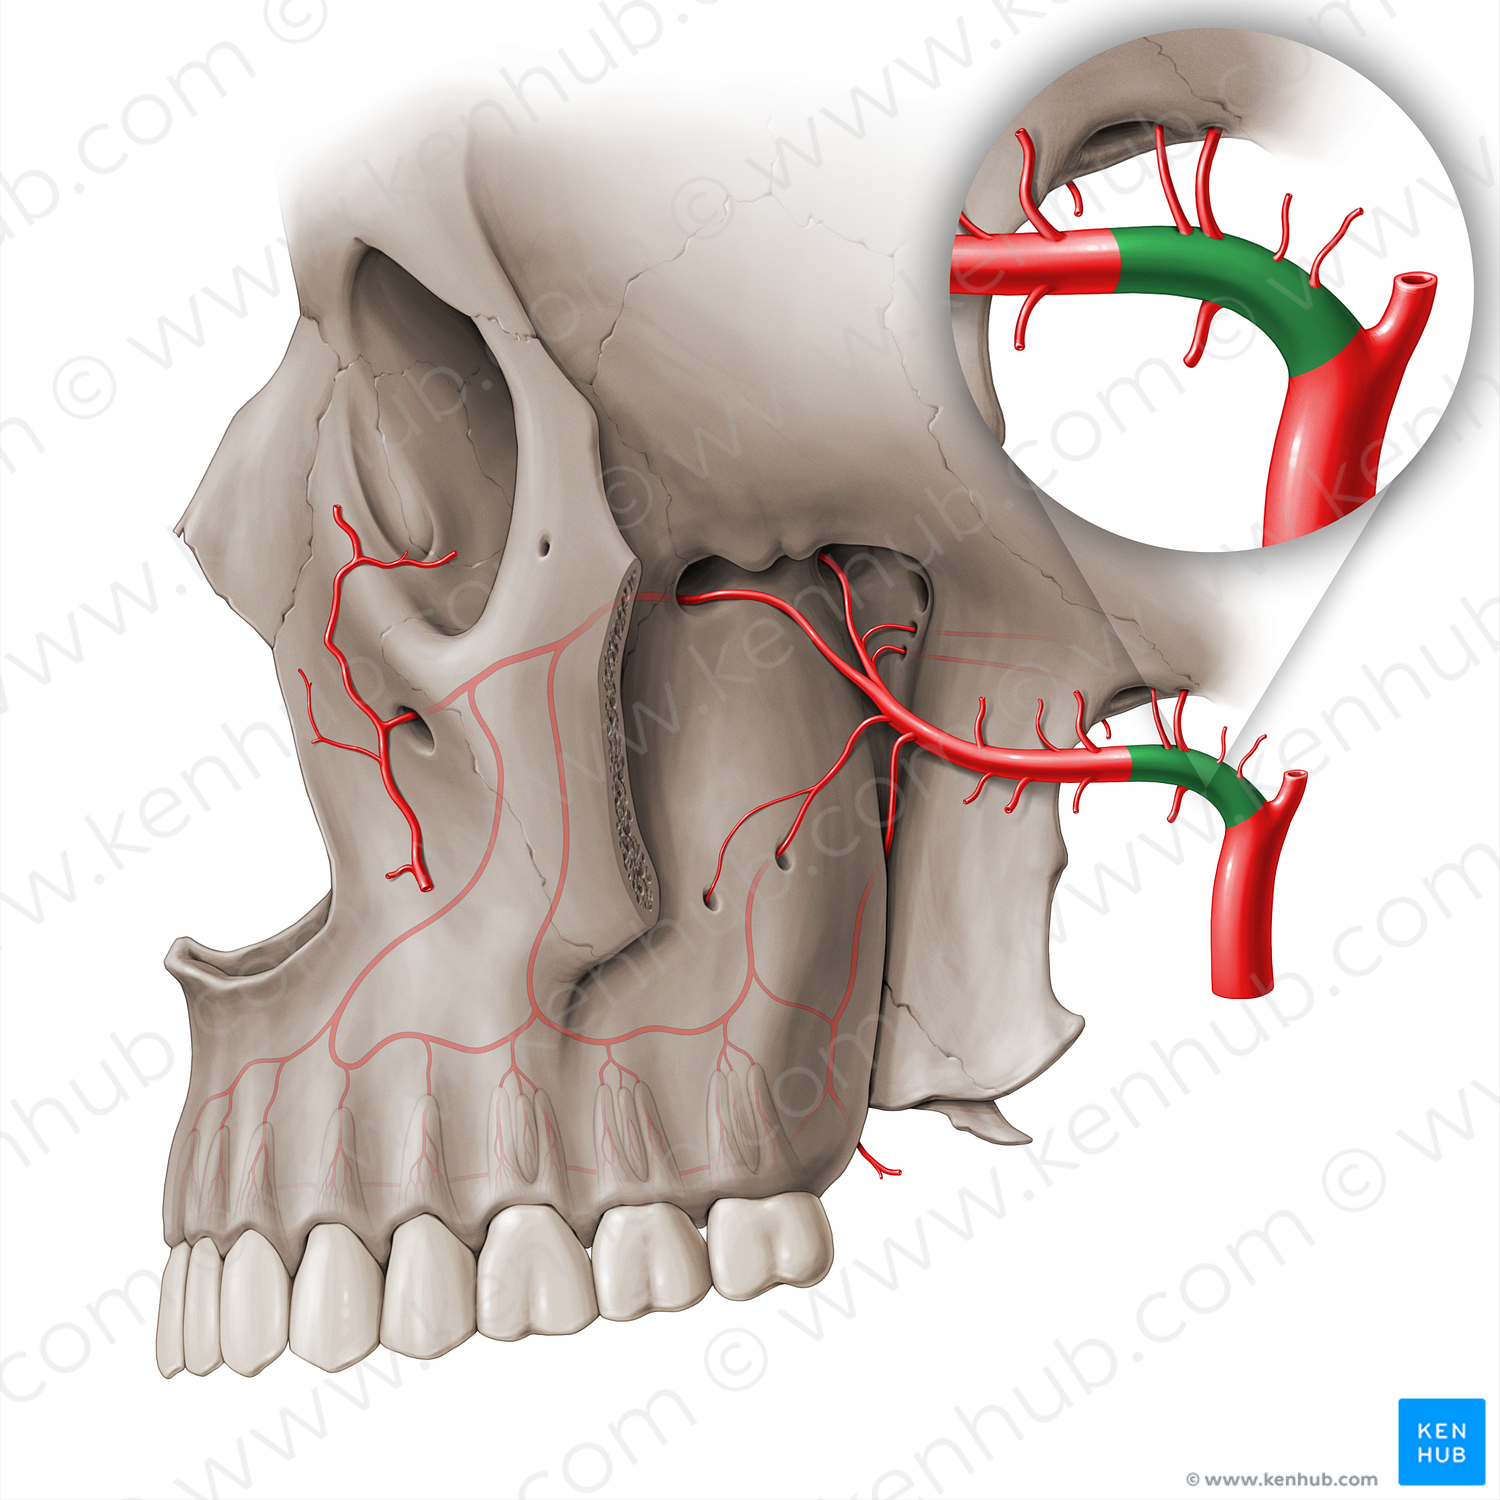 Mandibular part of maxillary artery (#18507)